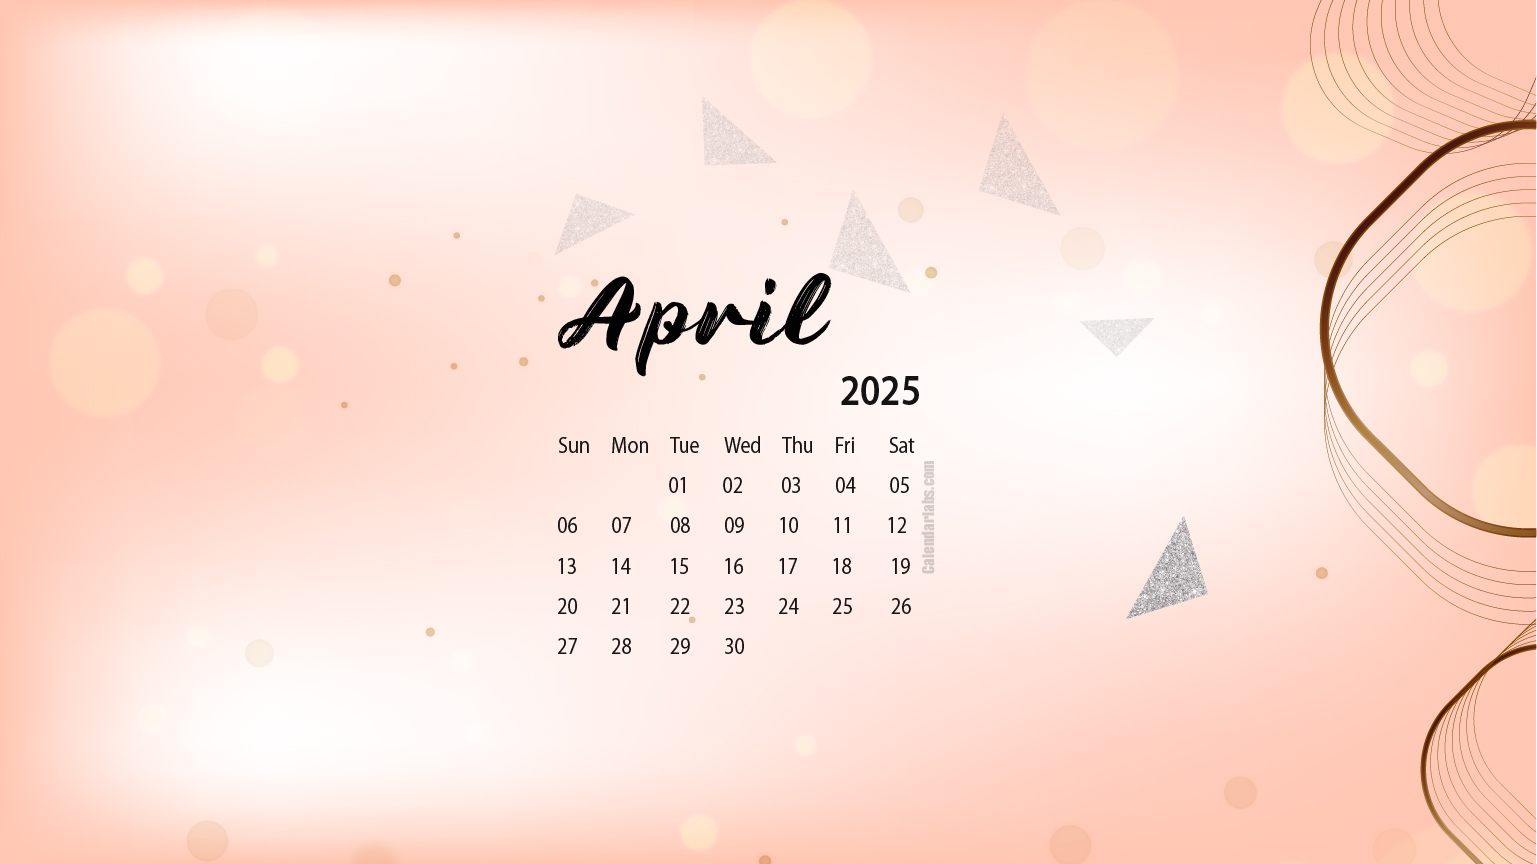 April 2025 Desktop Wallpaper Calendar